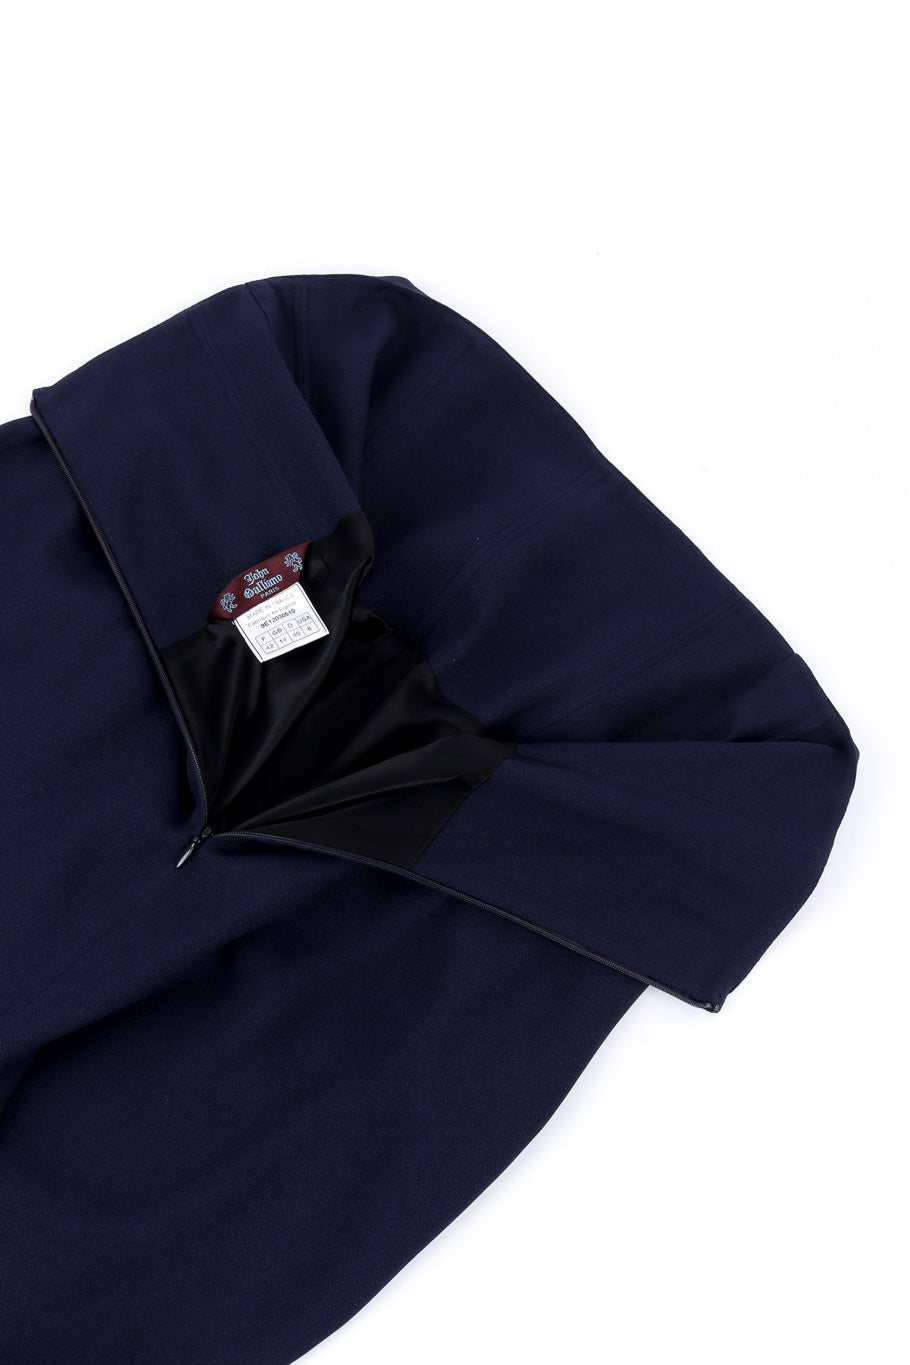 Vintage John Galliano 1999 S/S Draped Jacket and Skirt Set skirt unzipped @recessla